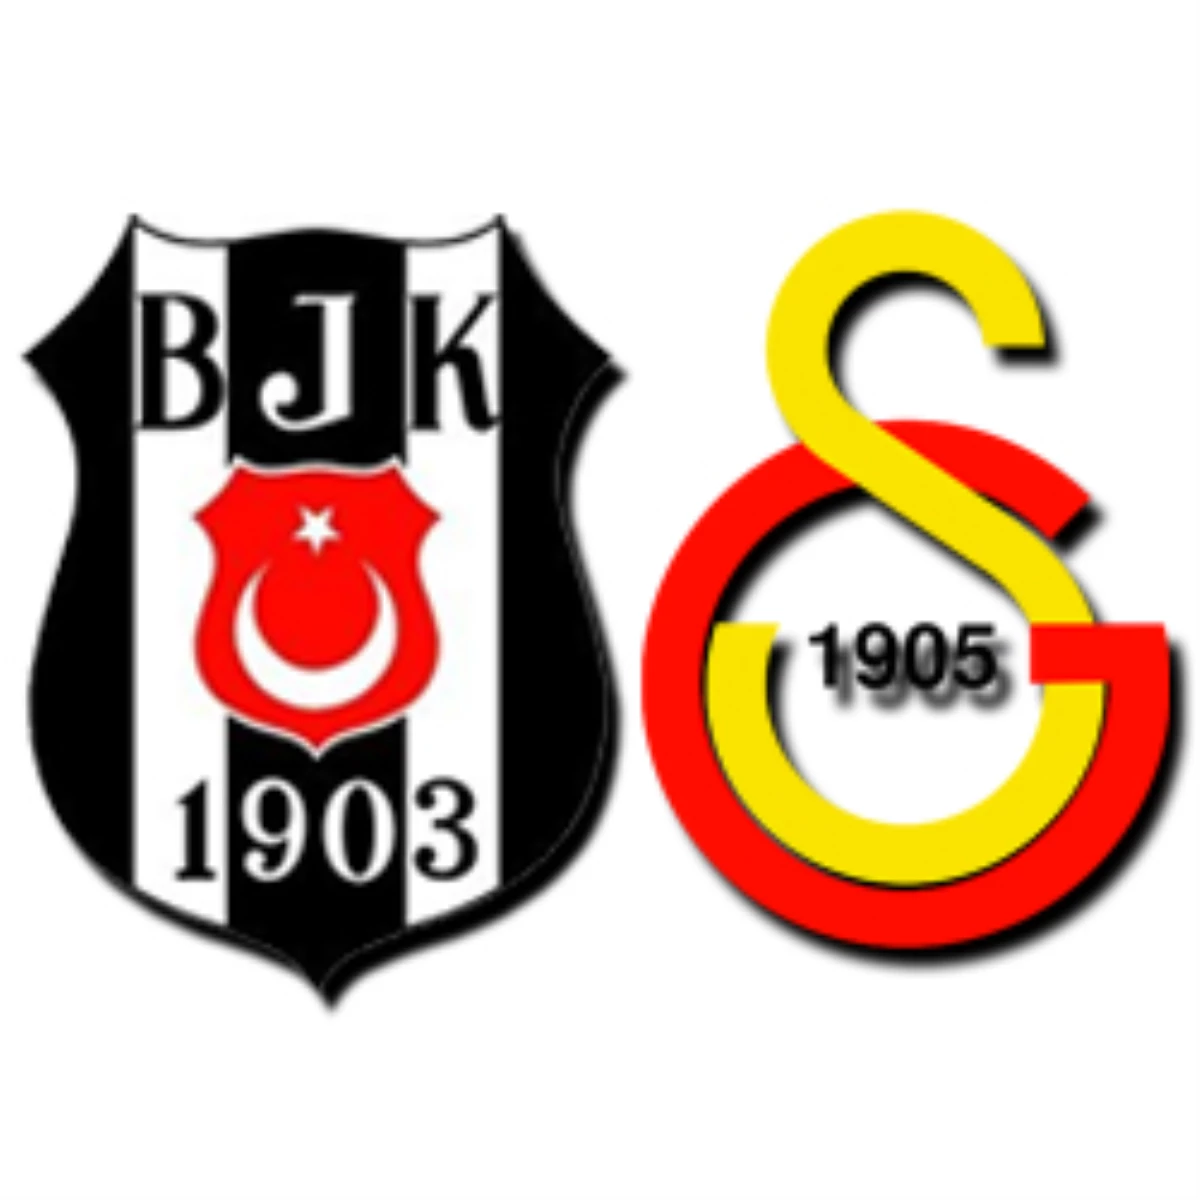 Beşiktaş 2 - 0 Galatasaray